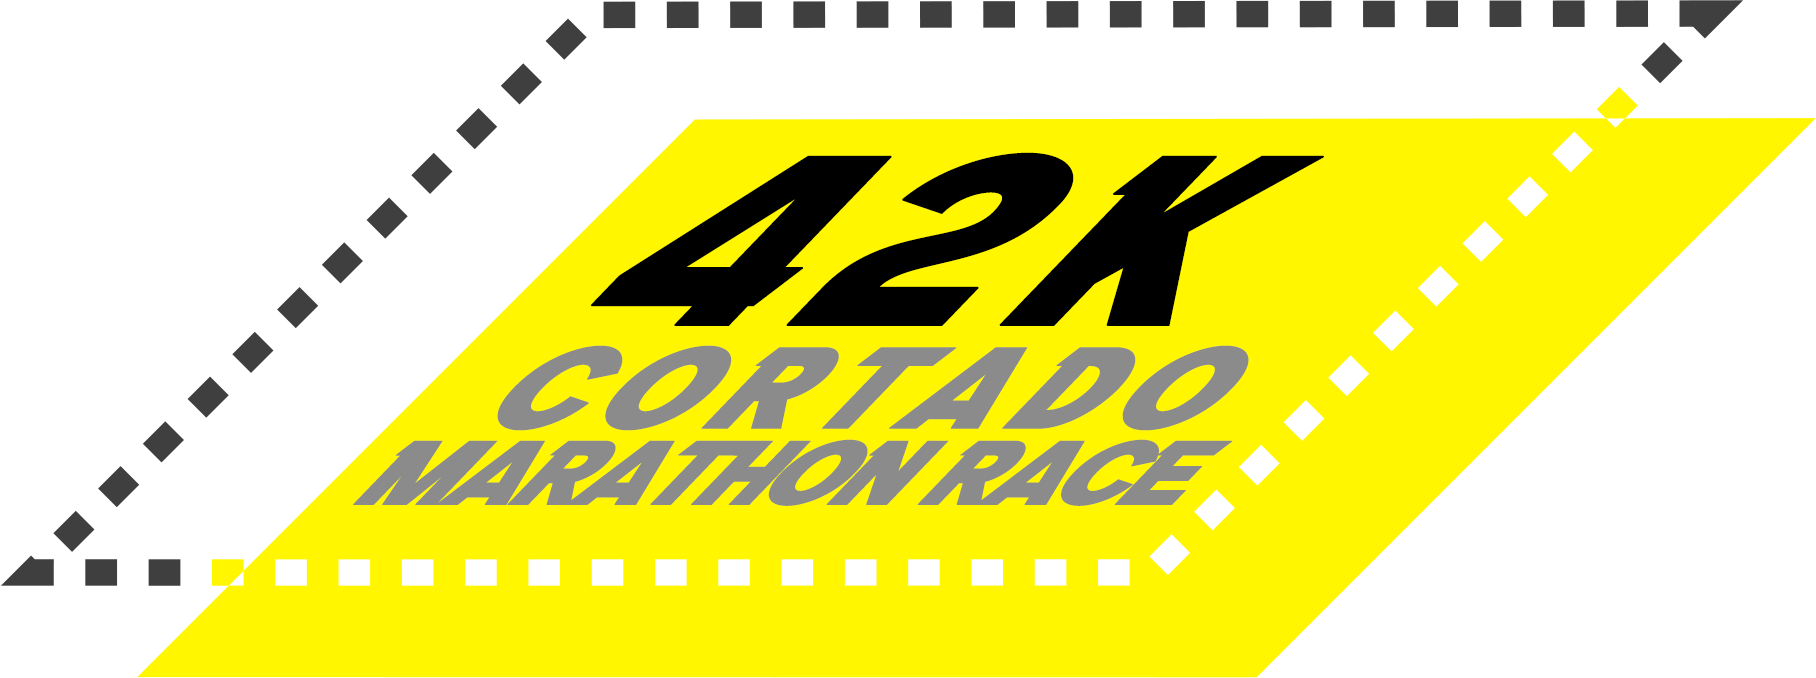 image_42K-run_logo